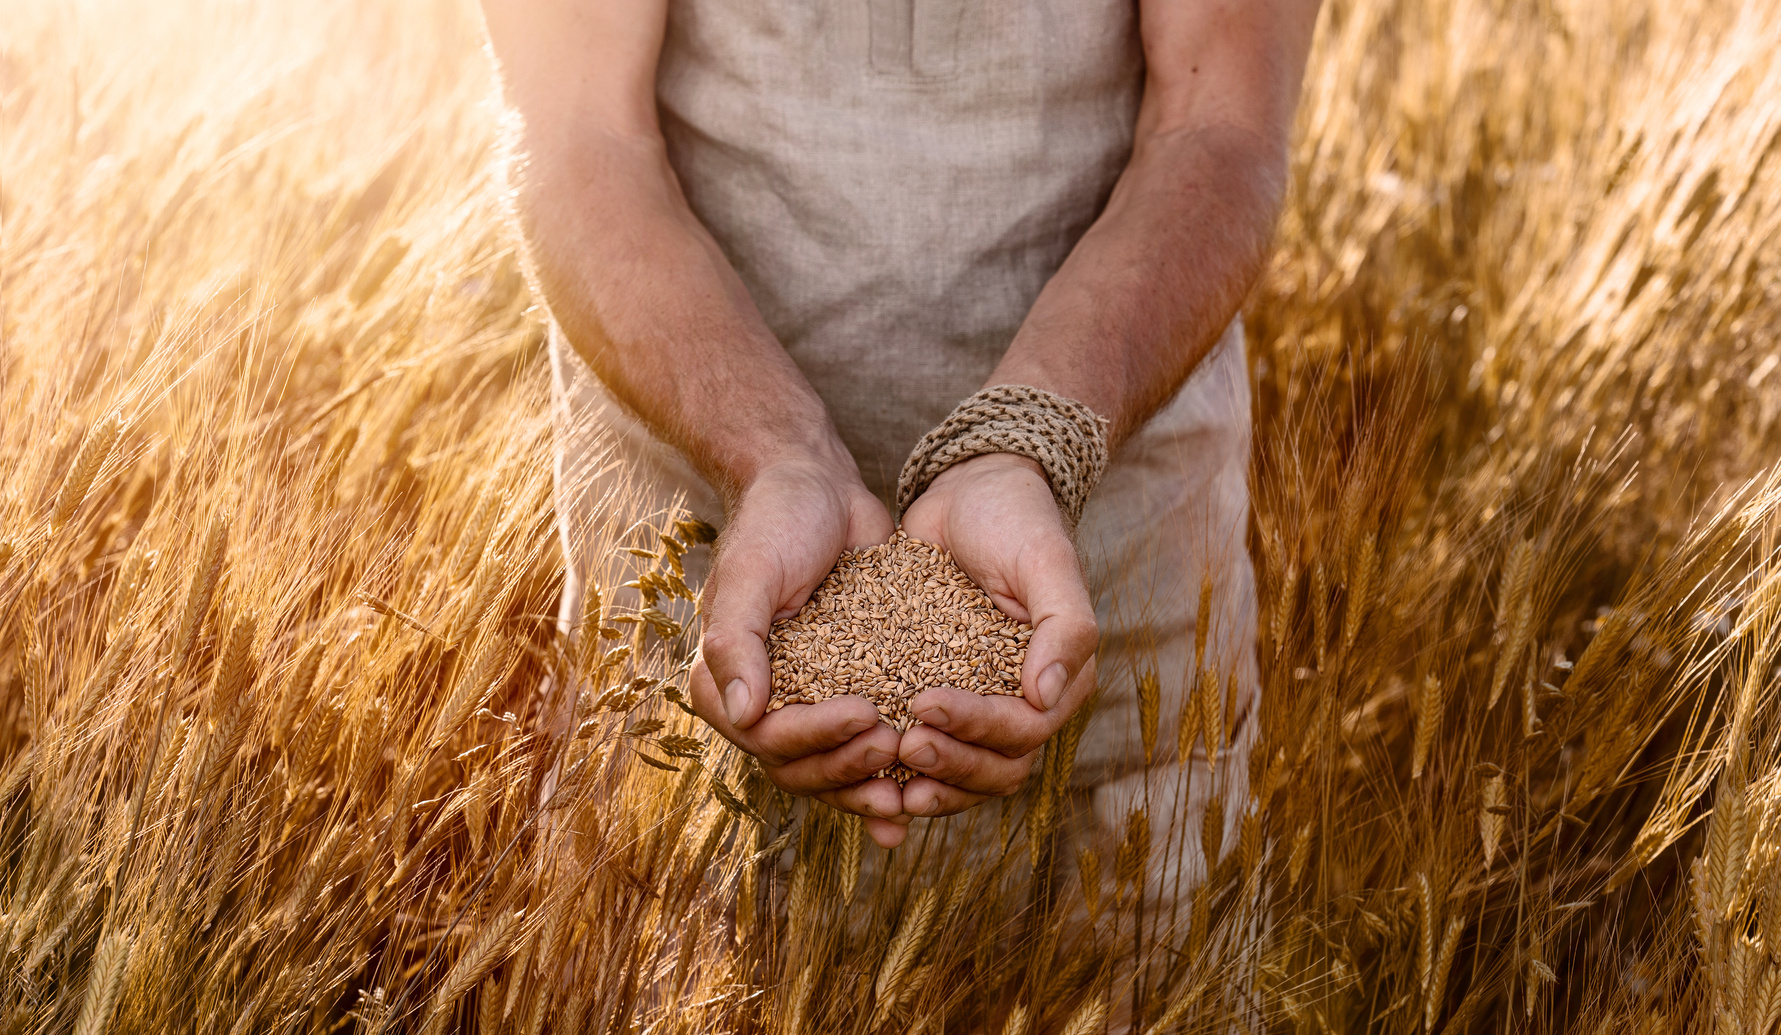 Farmer's hands holding organic einkorn wheat seeds